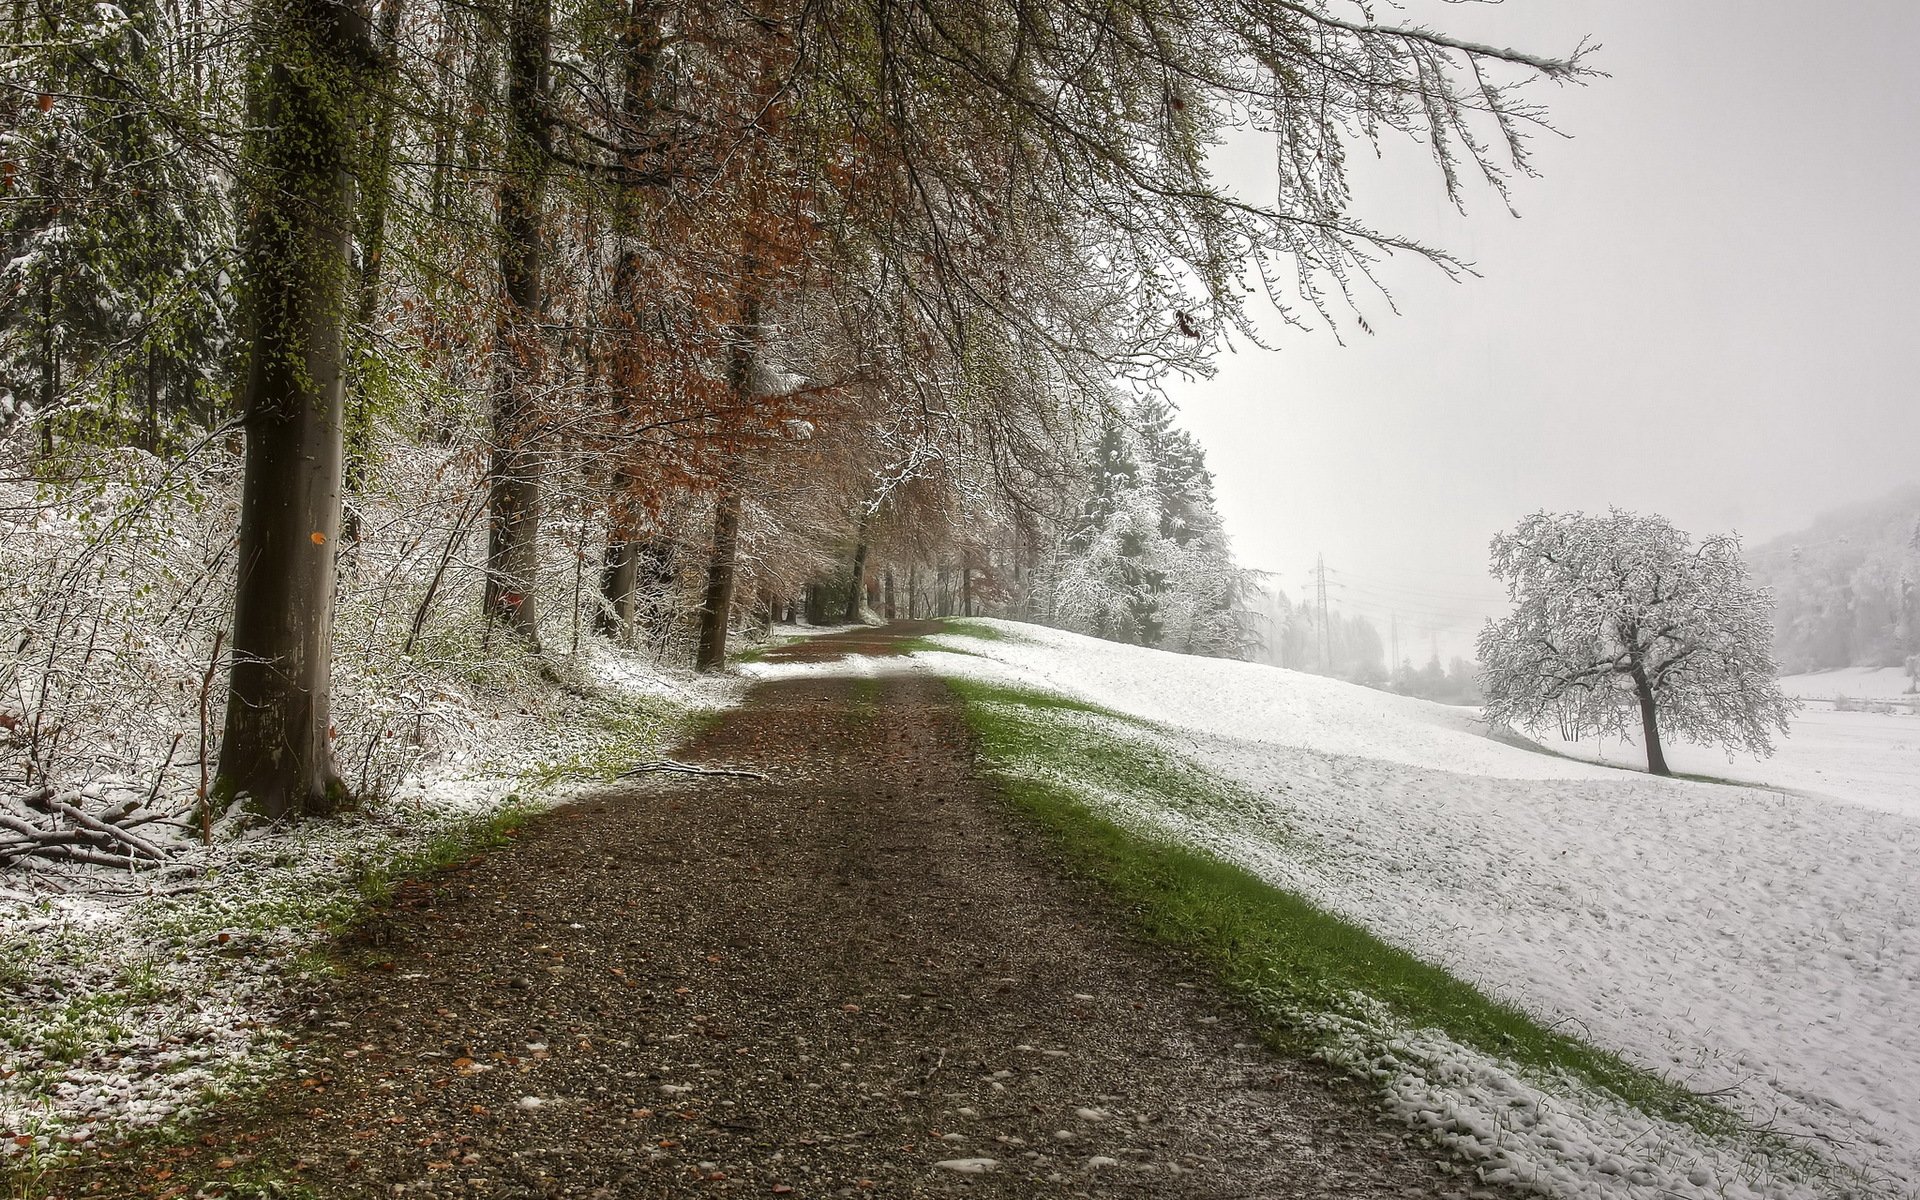 Дорога без снега. Ранняя зима. Первый снег в лесу. Поздняя зима. Весенняя дорога в лесу.